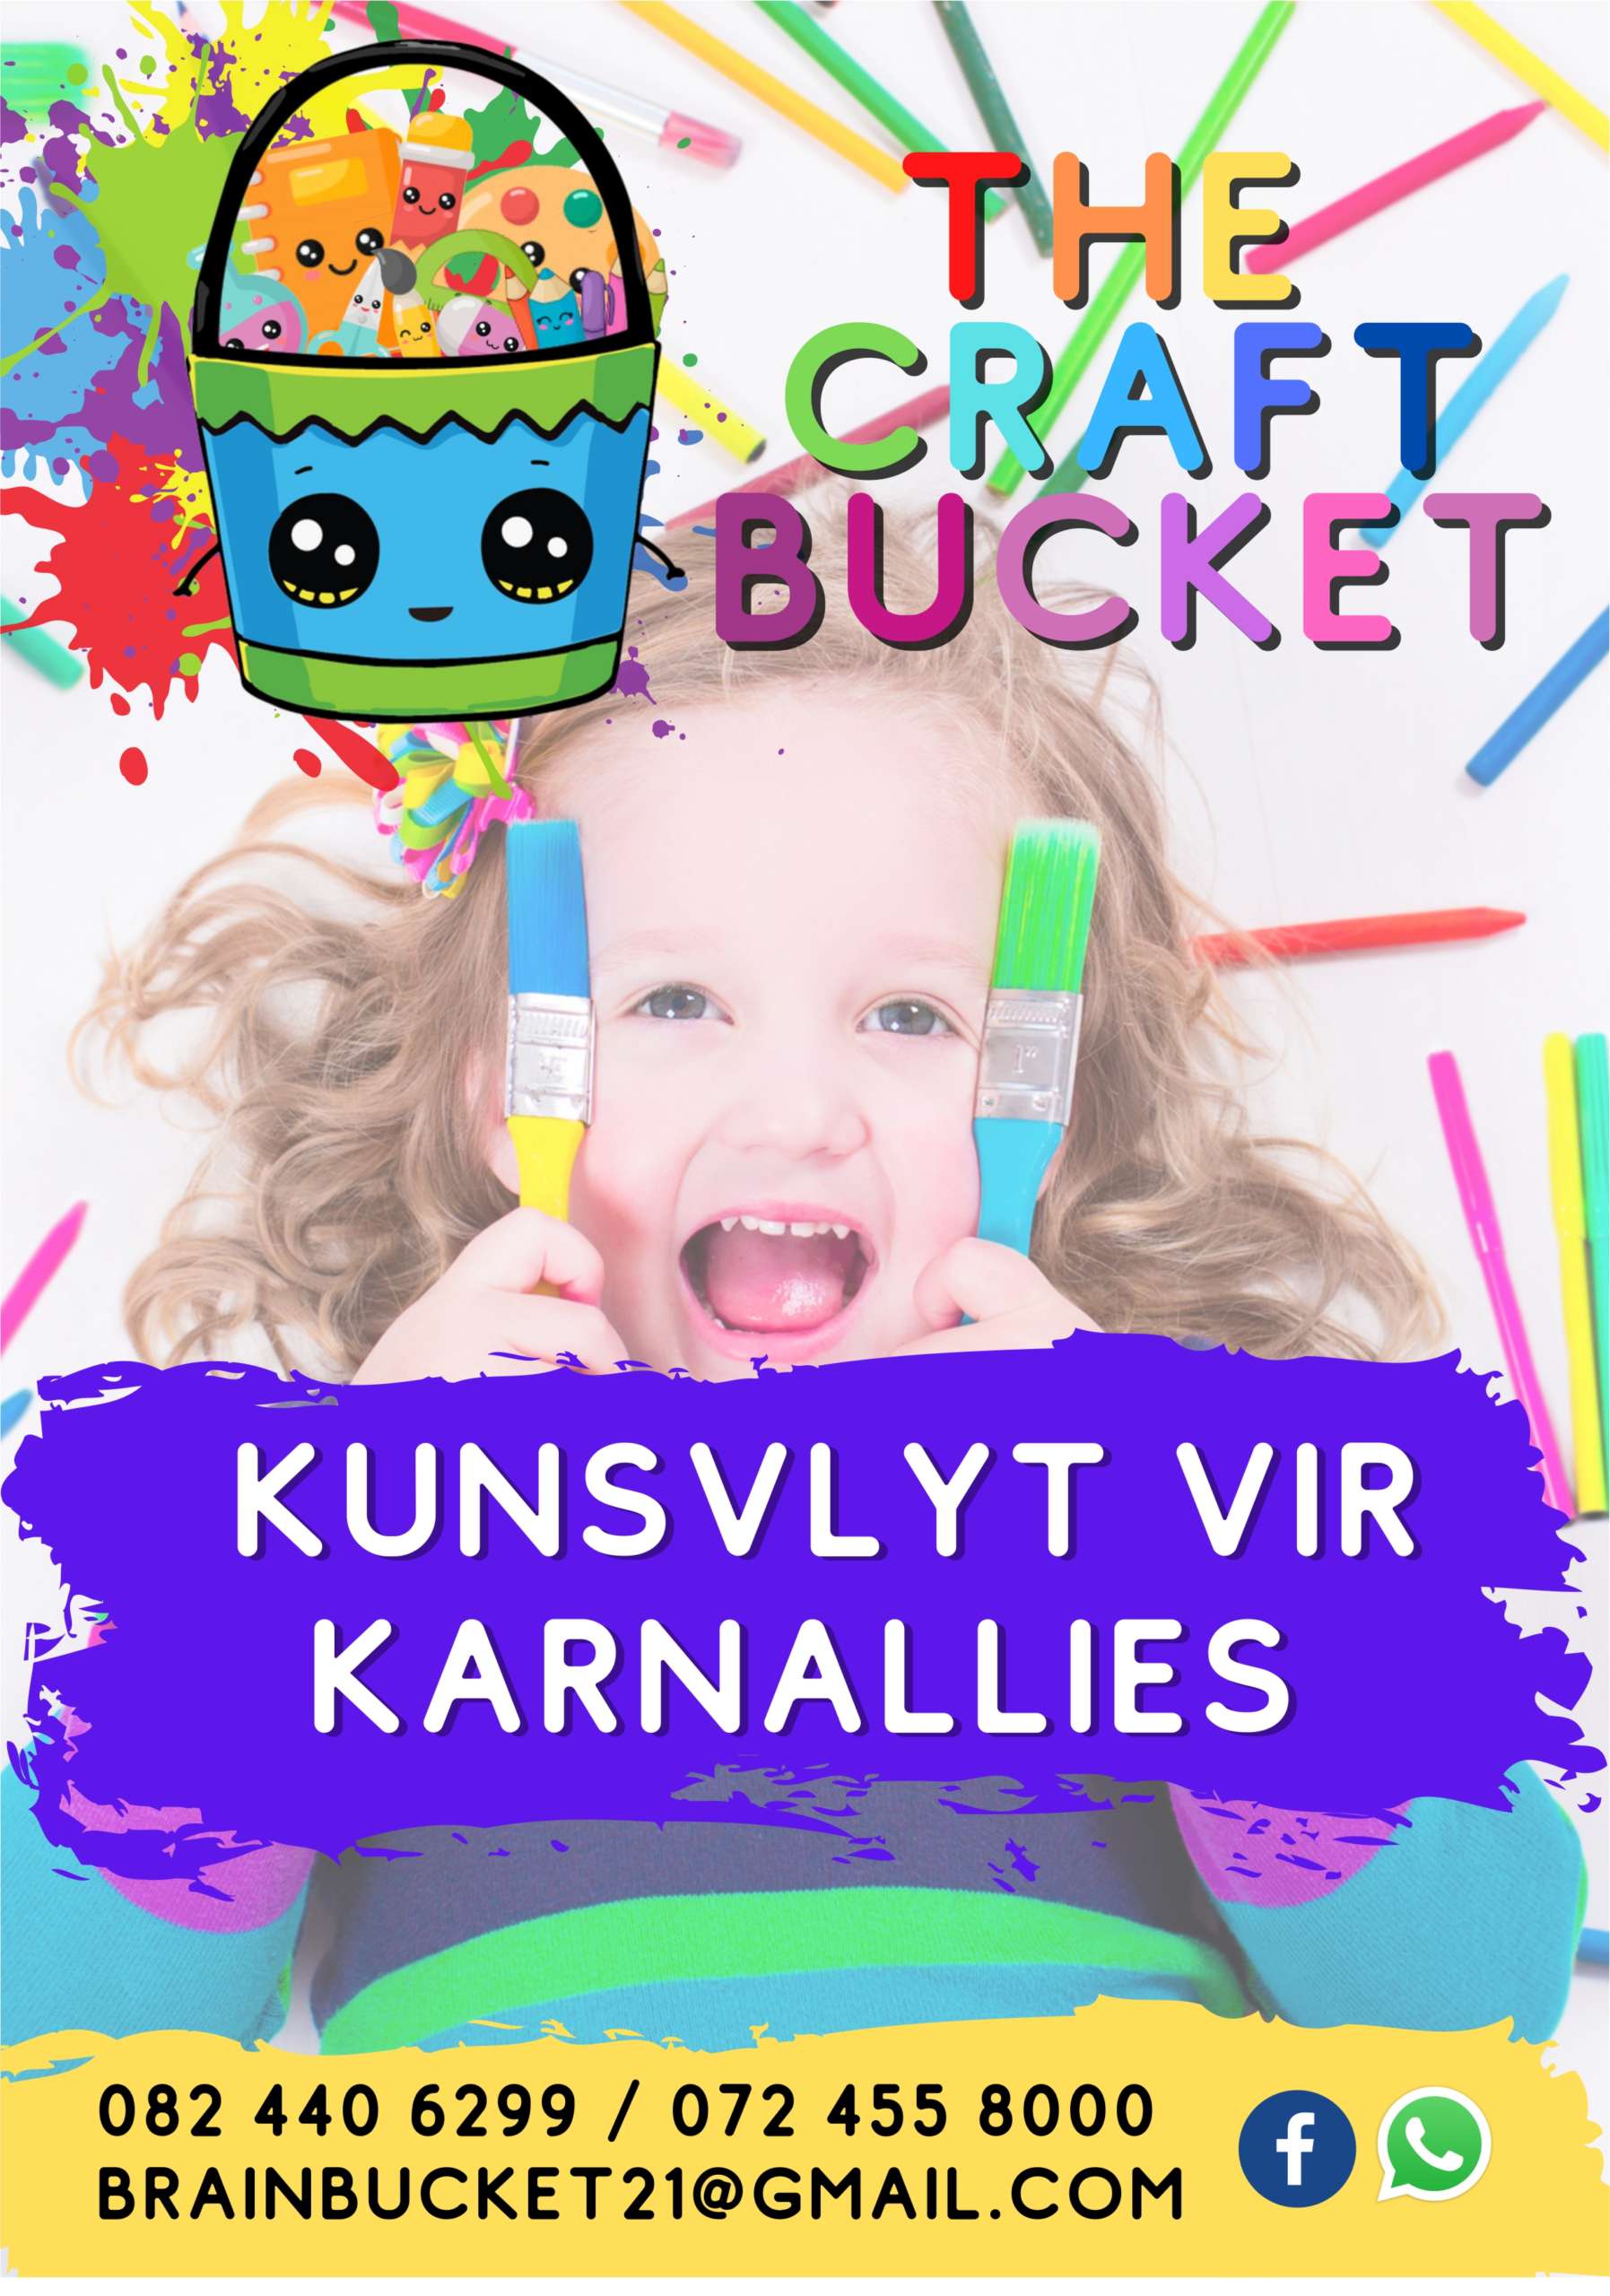 https://www.constantiakruin.co.za/wp-content/uploads/2022/01/The-Craft-Bucket-scaled.jpg